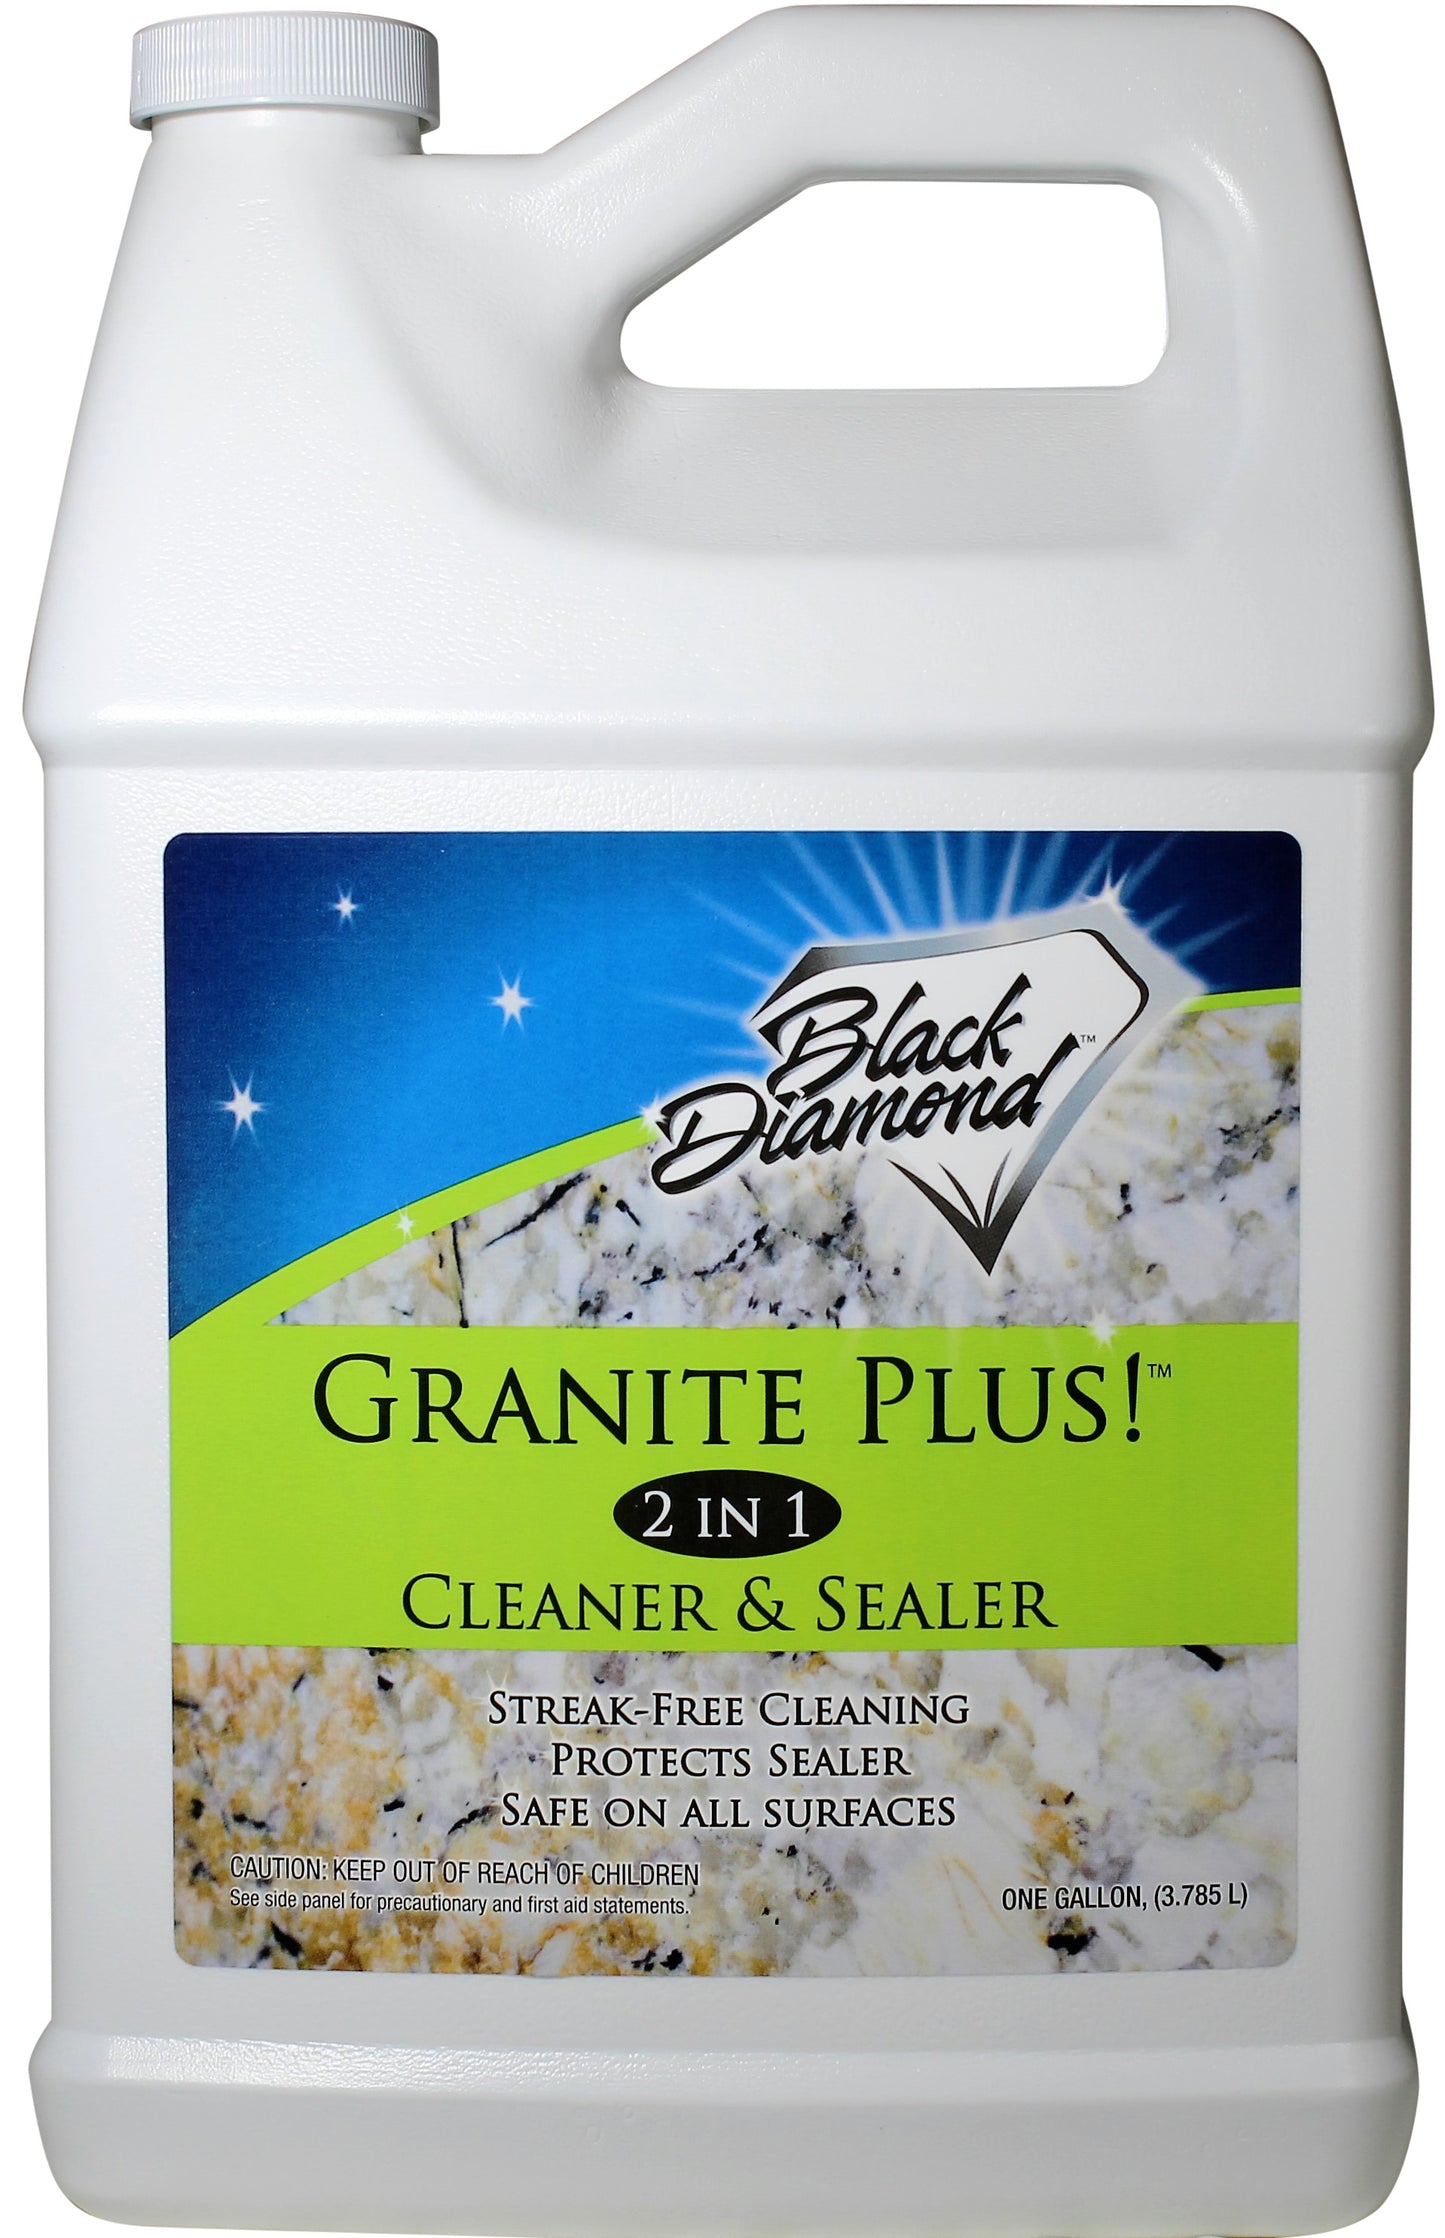 Granite Plus! 2 in 1 Granite Cleaner & Sealer Black Diamond Stoneworks GRANITE PLUS! 2 in 1 Cleaner & Sealer for Granite, Marble, Travertine, Limestone, Ready to Use!